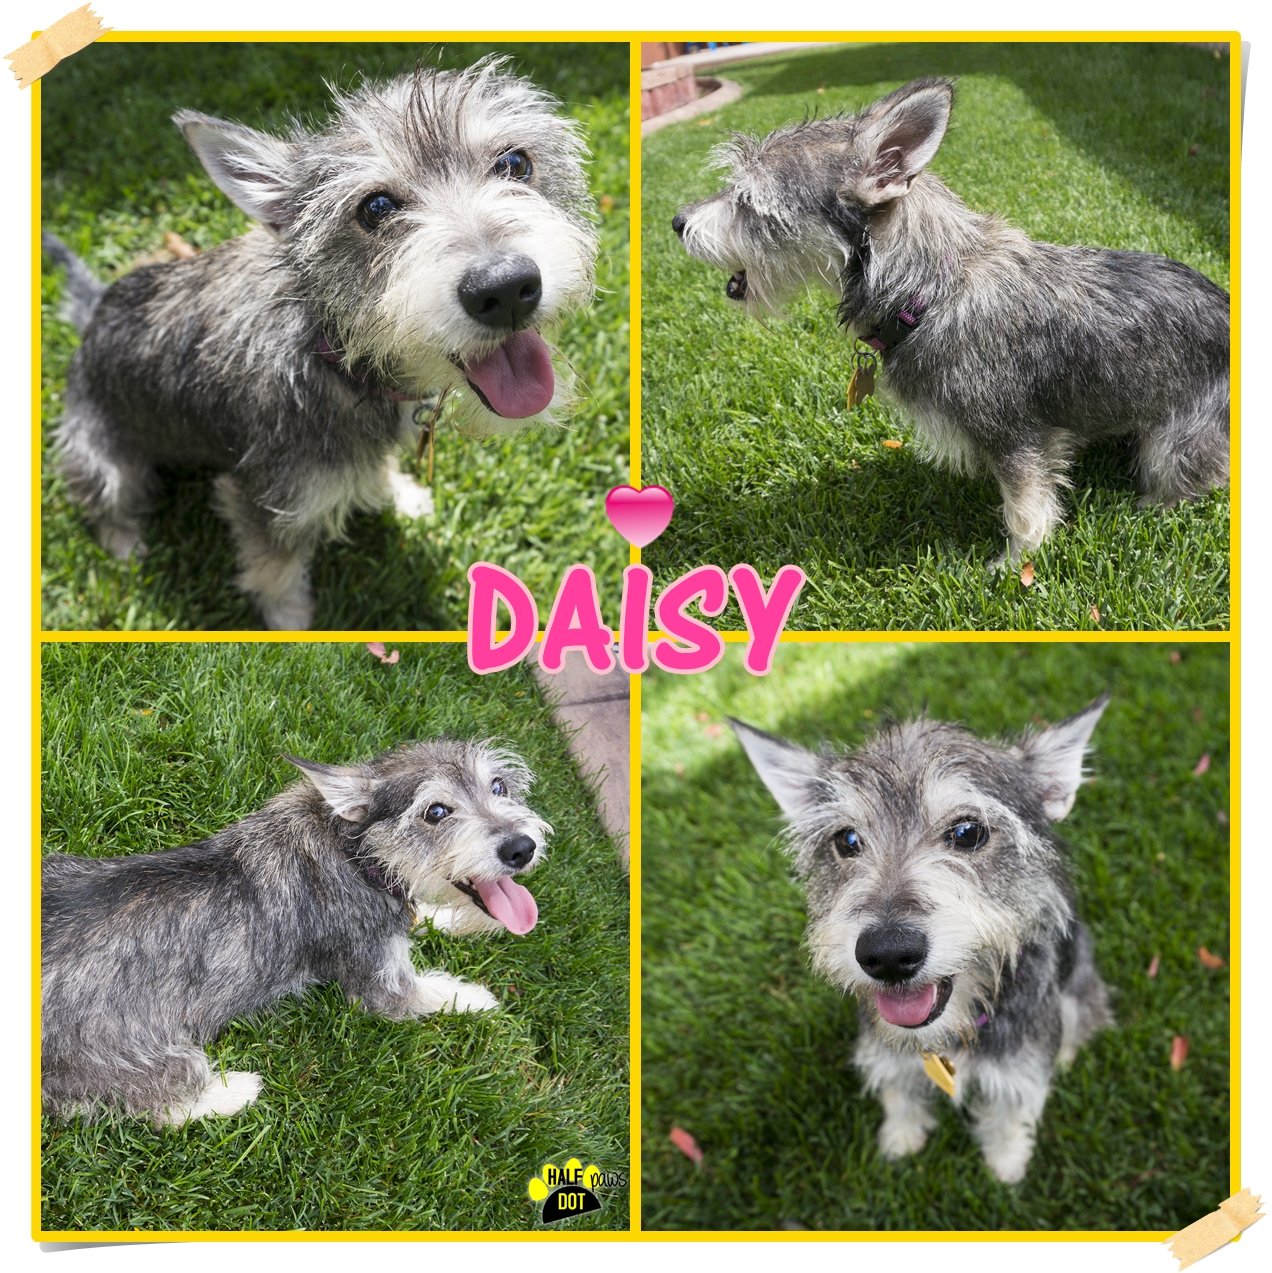 Daisy (Mini Schnauzer / Terrier for adoption)